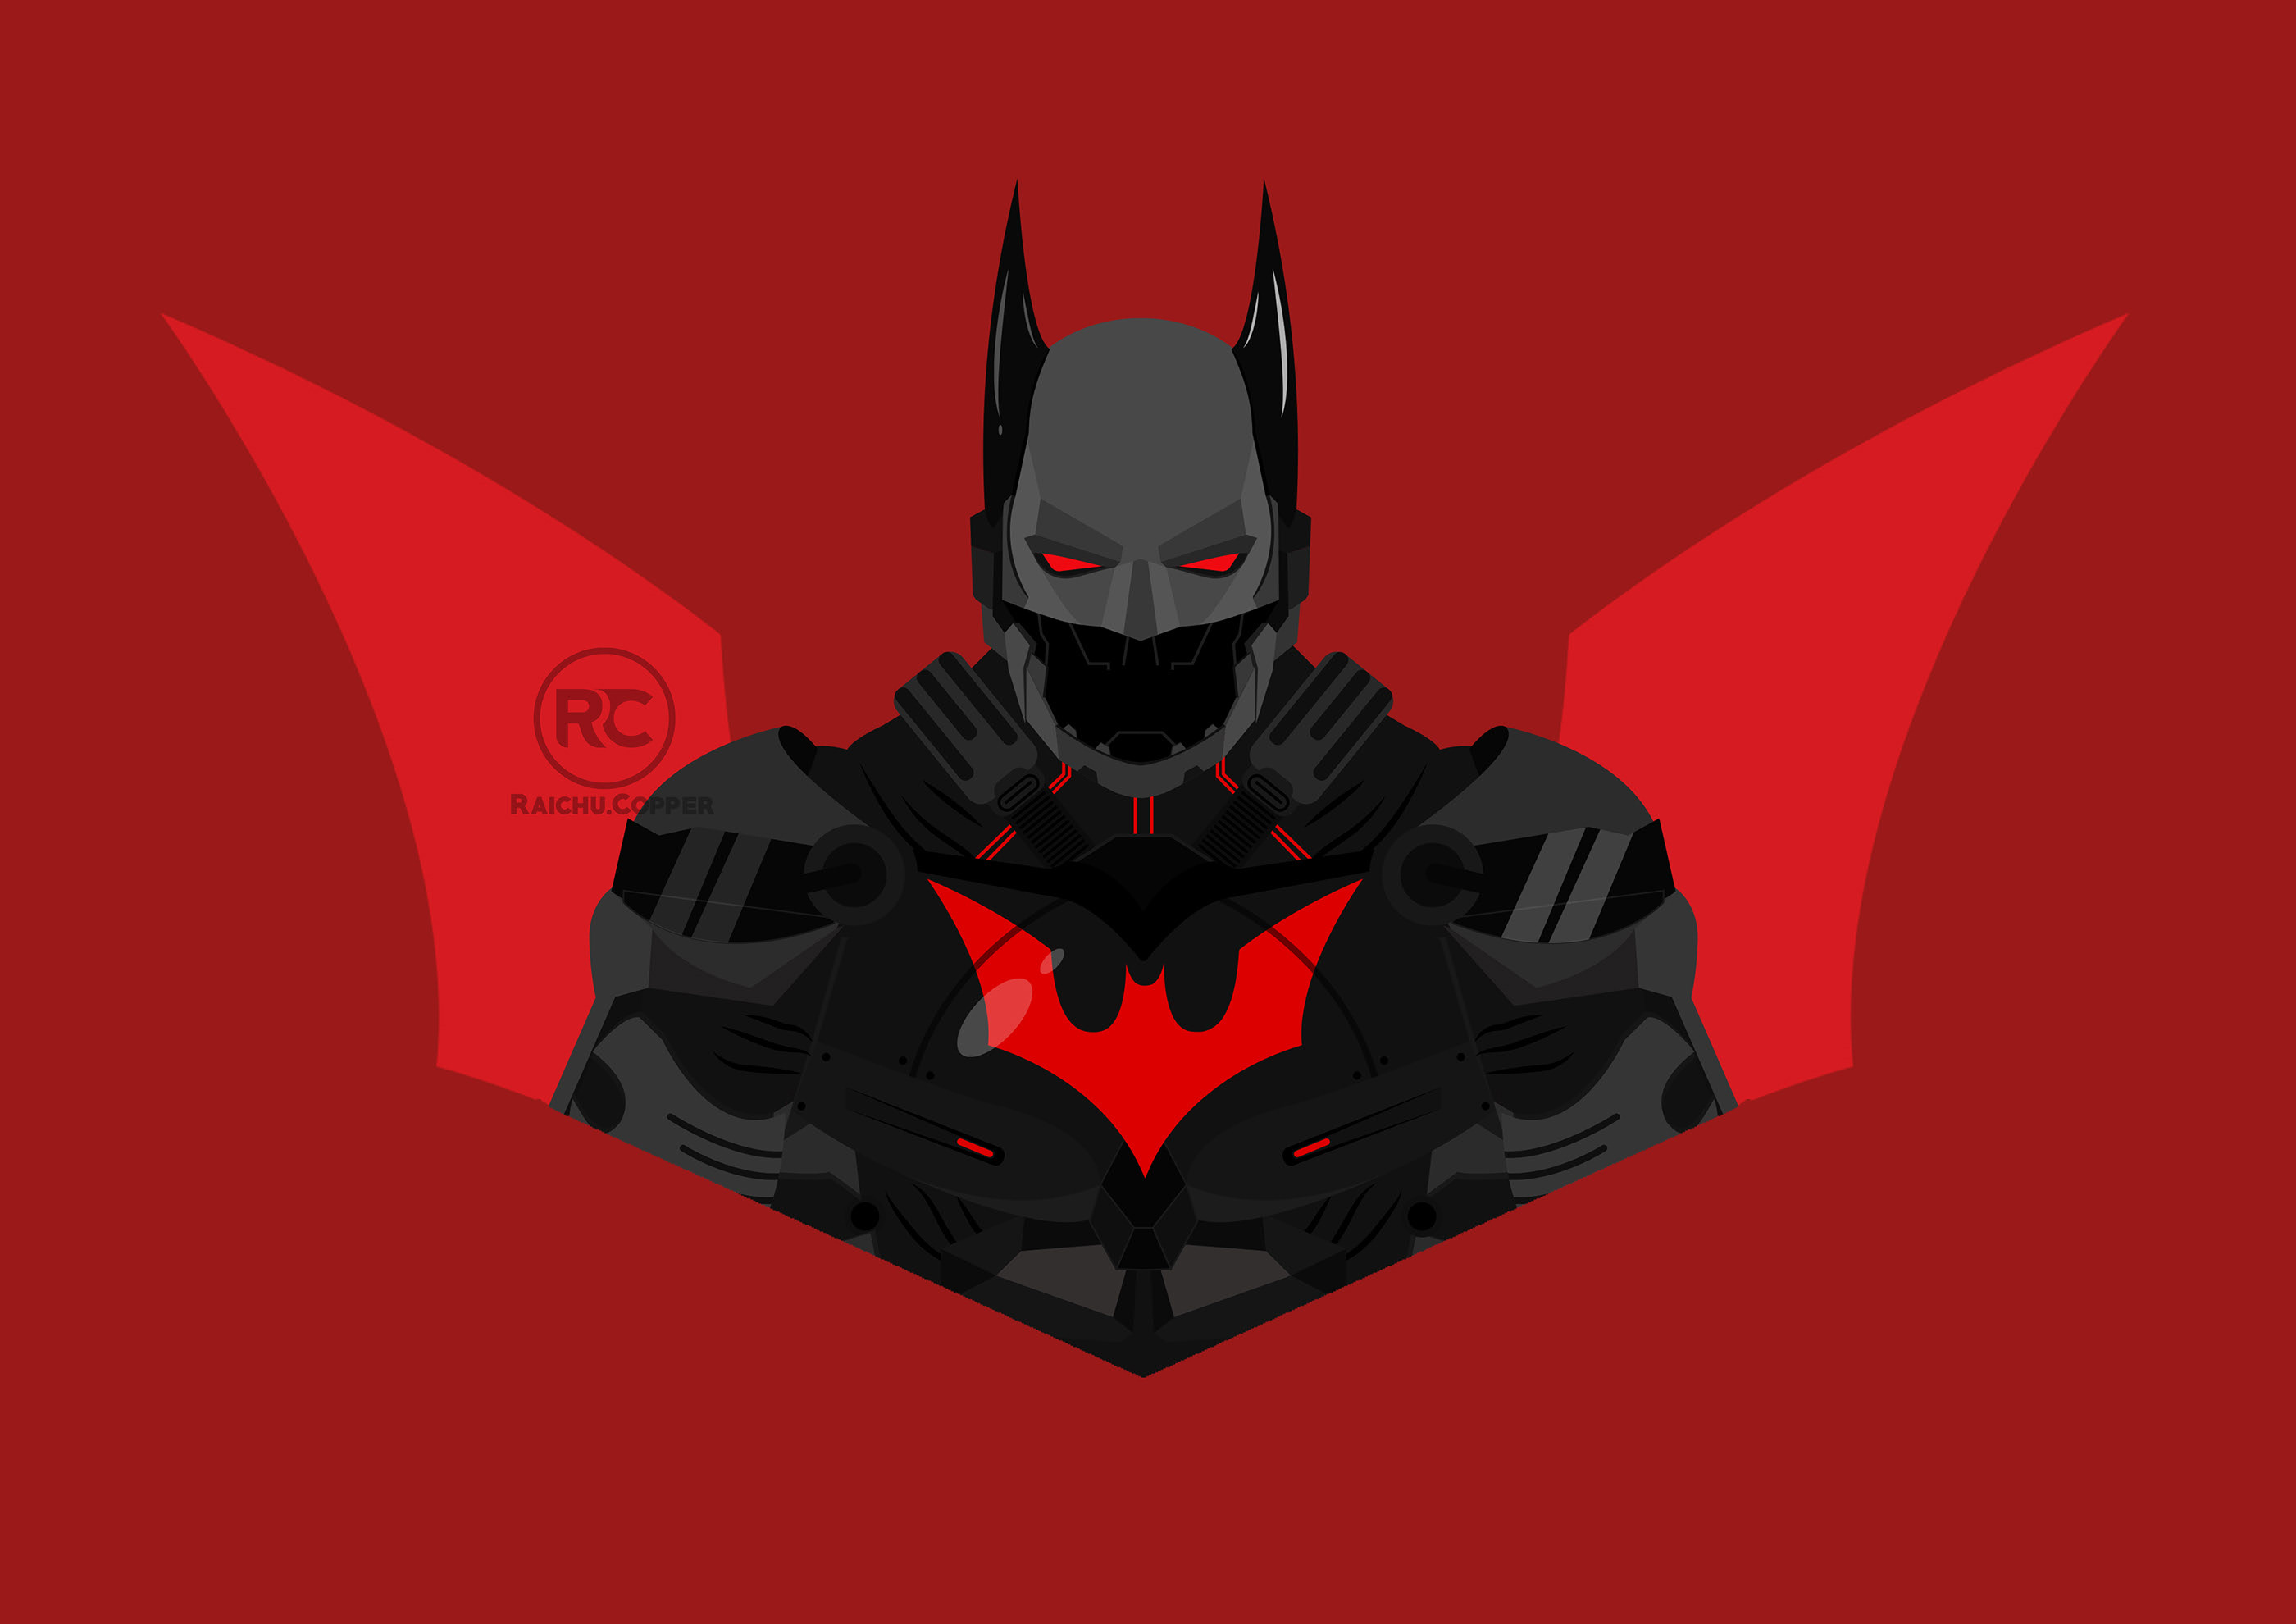 batman beyond arkham knight download